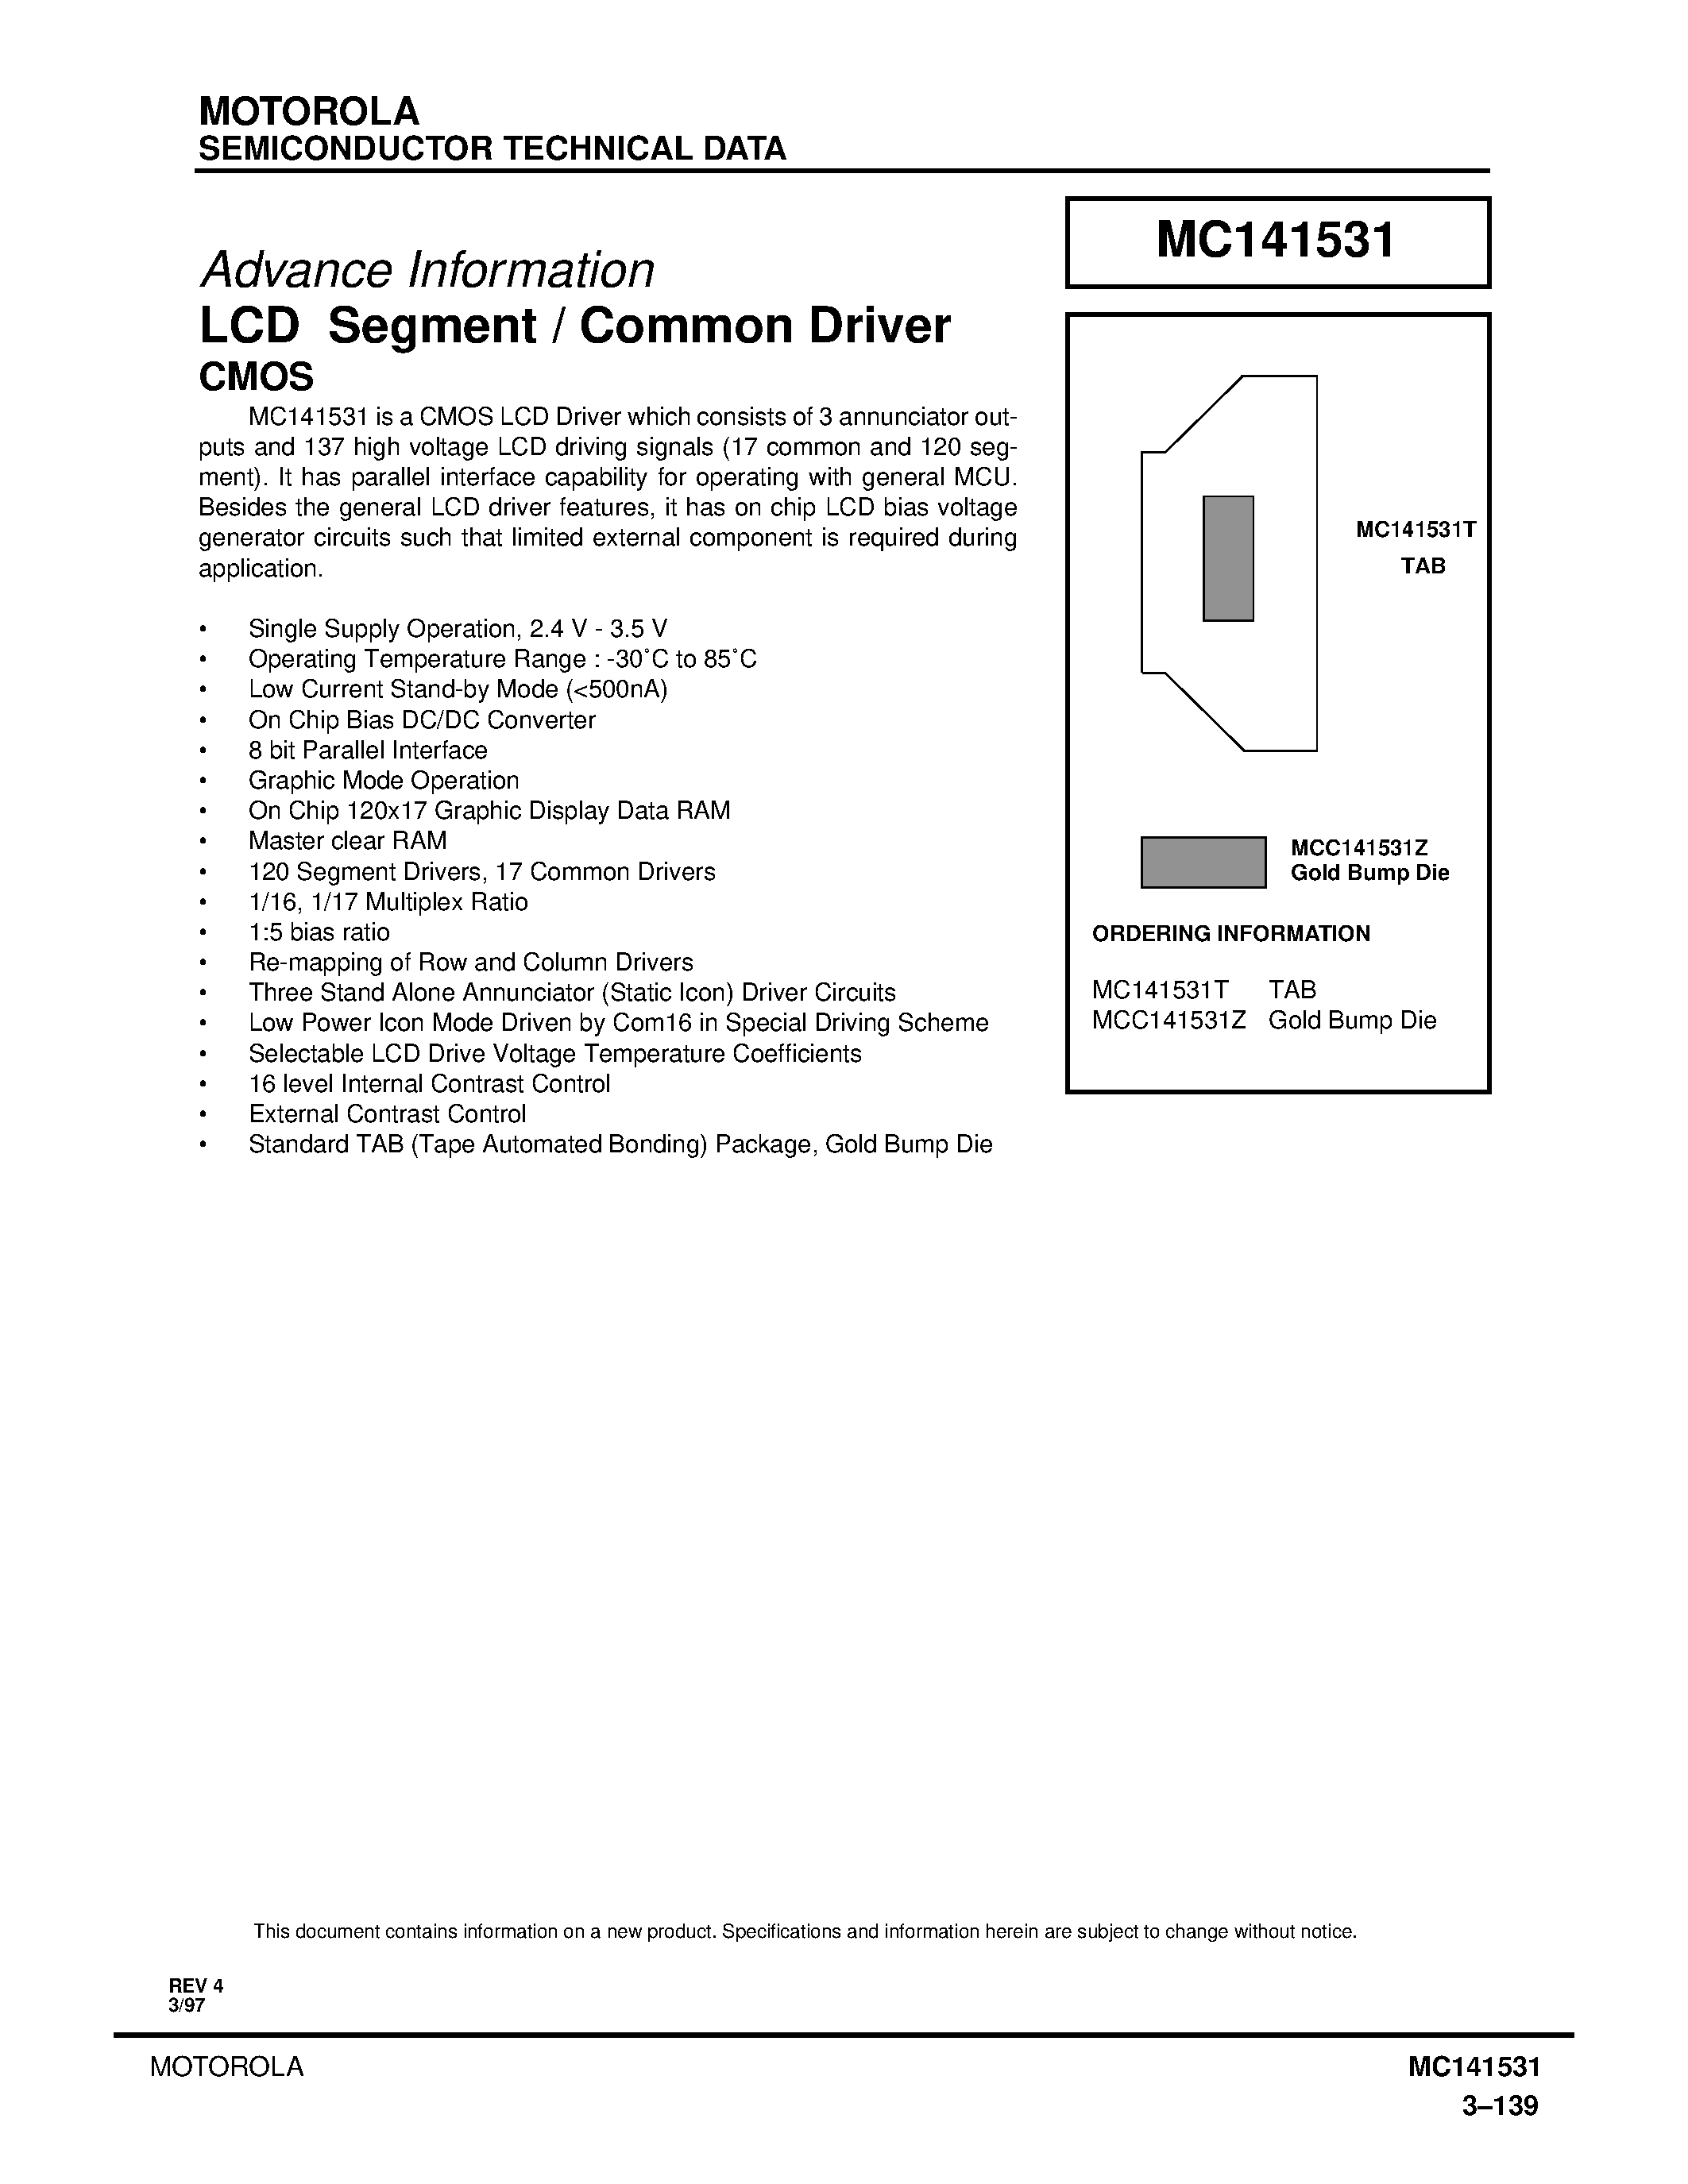 Datasheet MC141531T - LCD Segment/Common Driver CMOS page 1